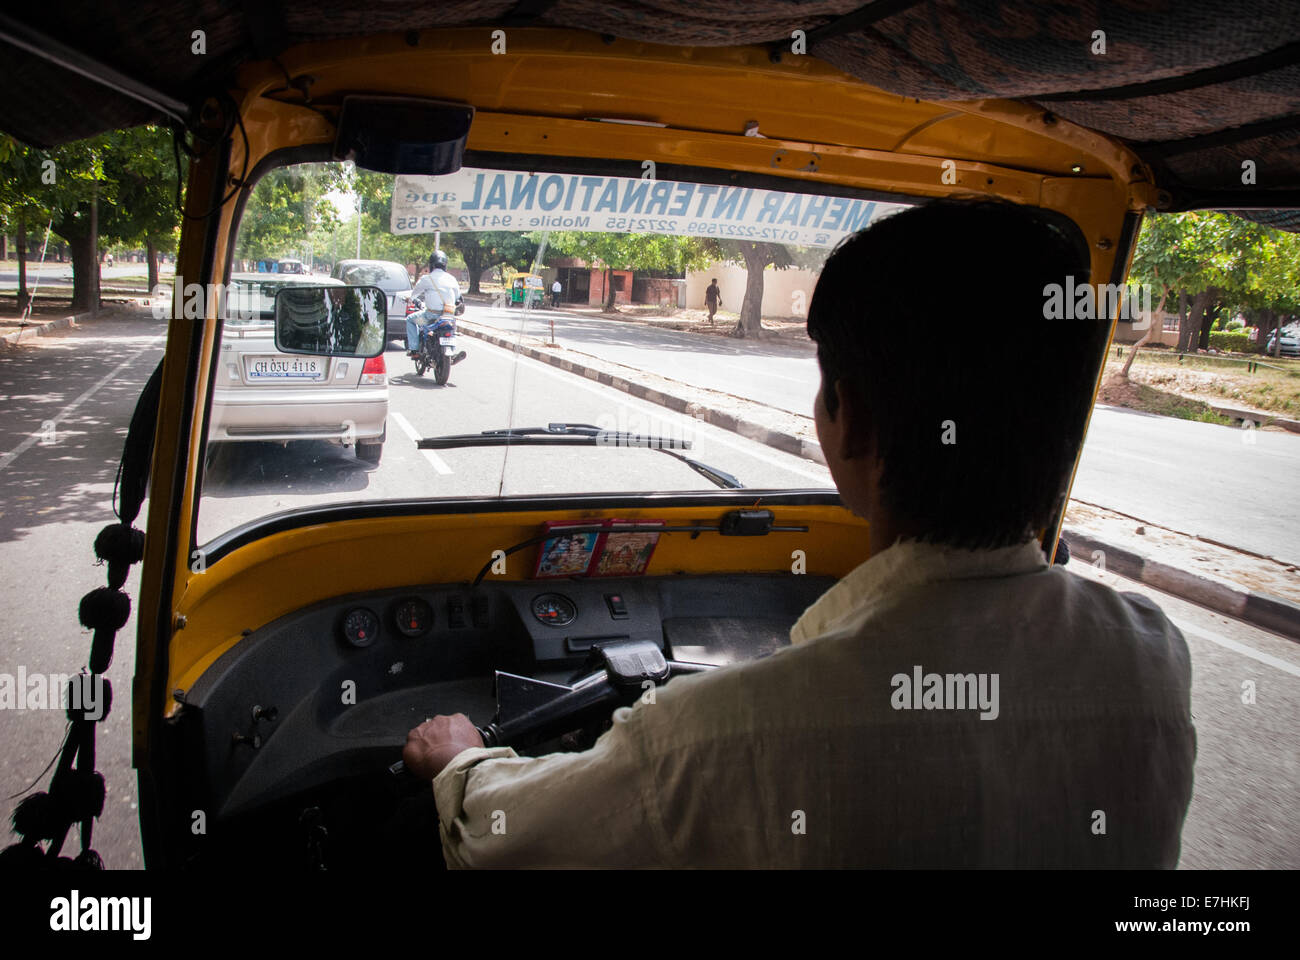 tuk tuk auto rickshaw taxi driver in Delhi India Stock Photo